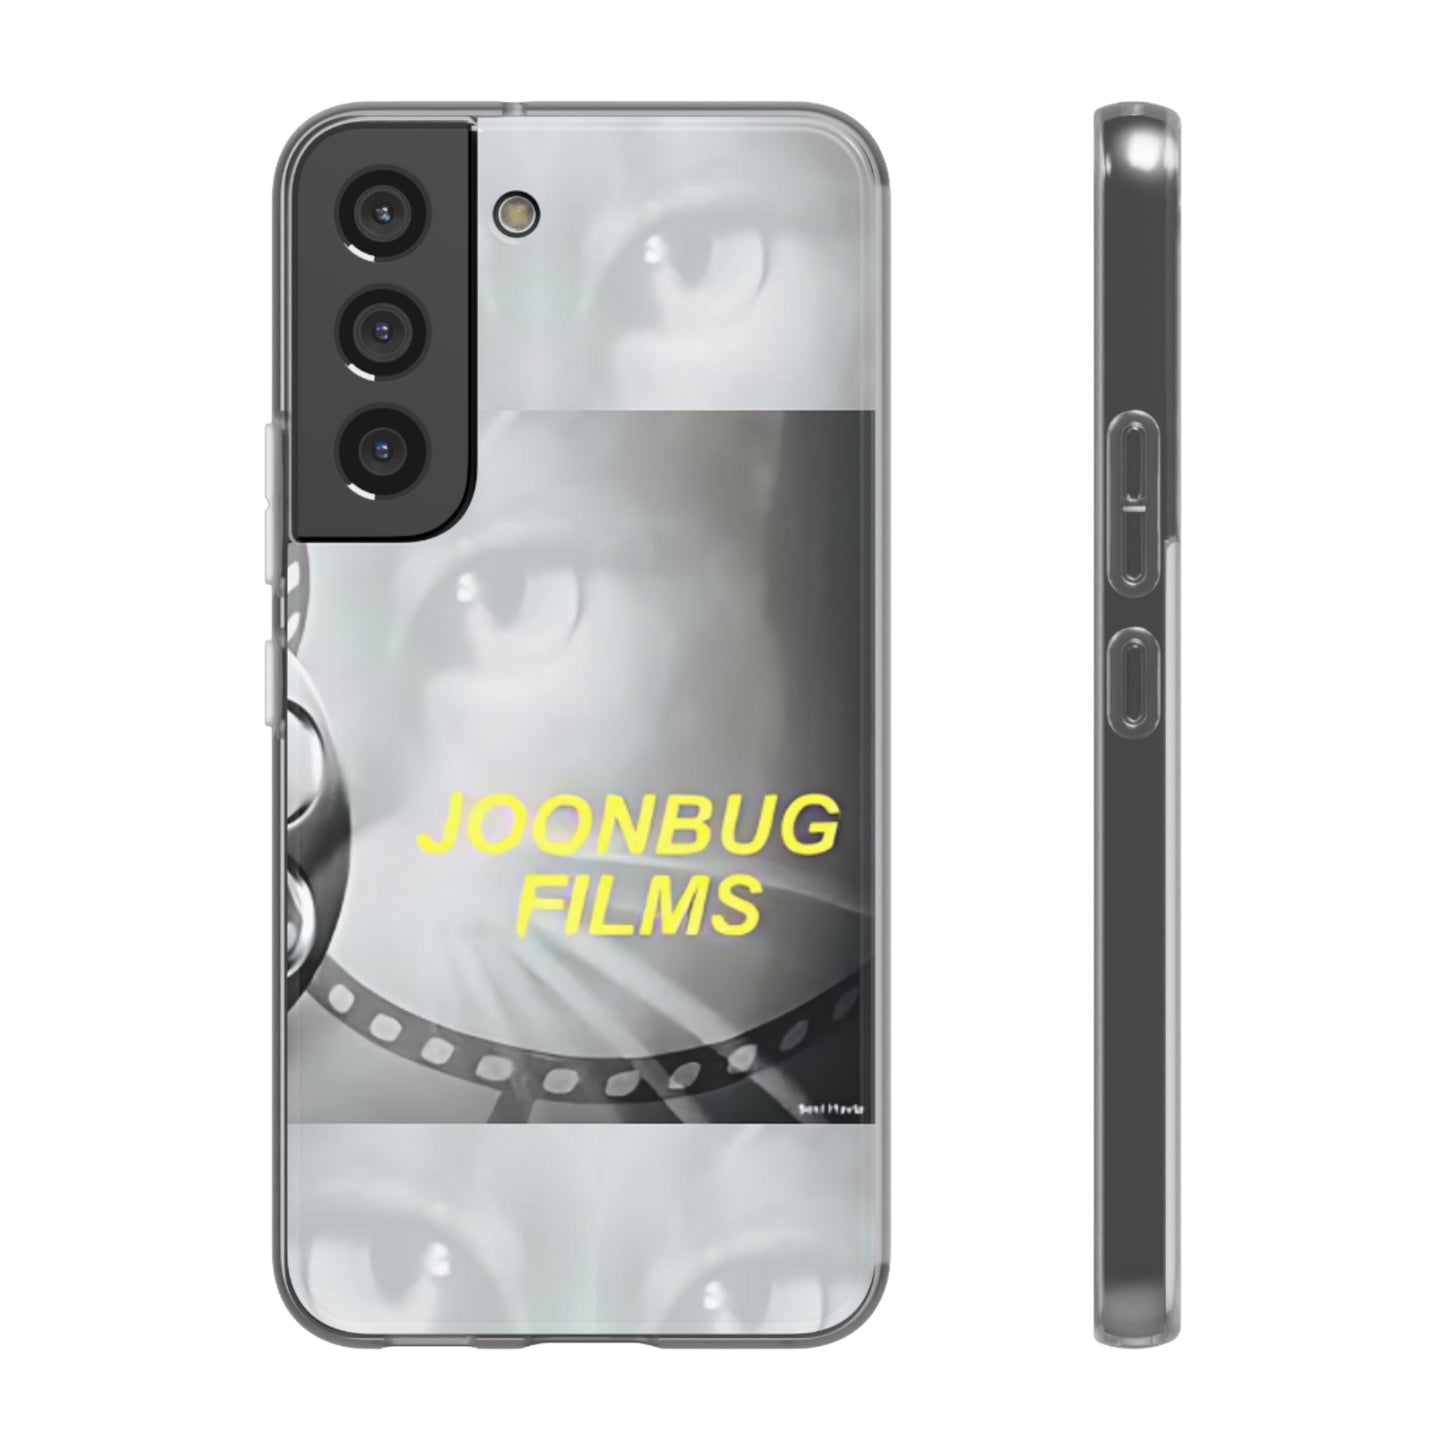 JOONBUG Films Logo Flexi Cases